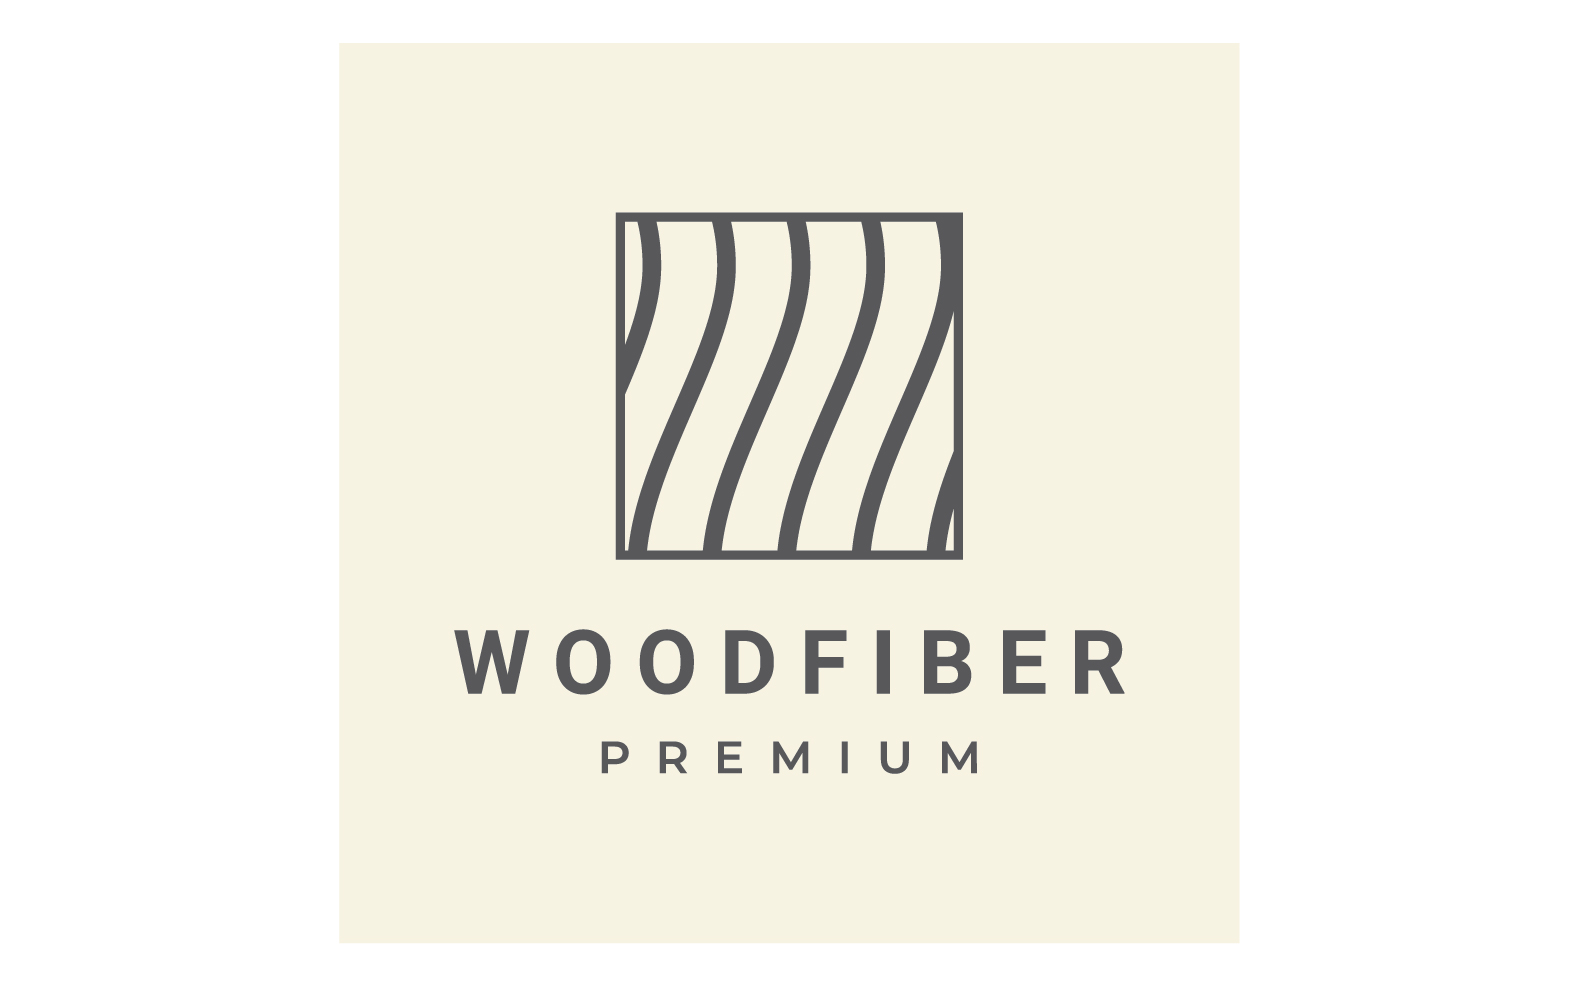 Wooden furniture work logo vector 3